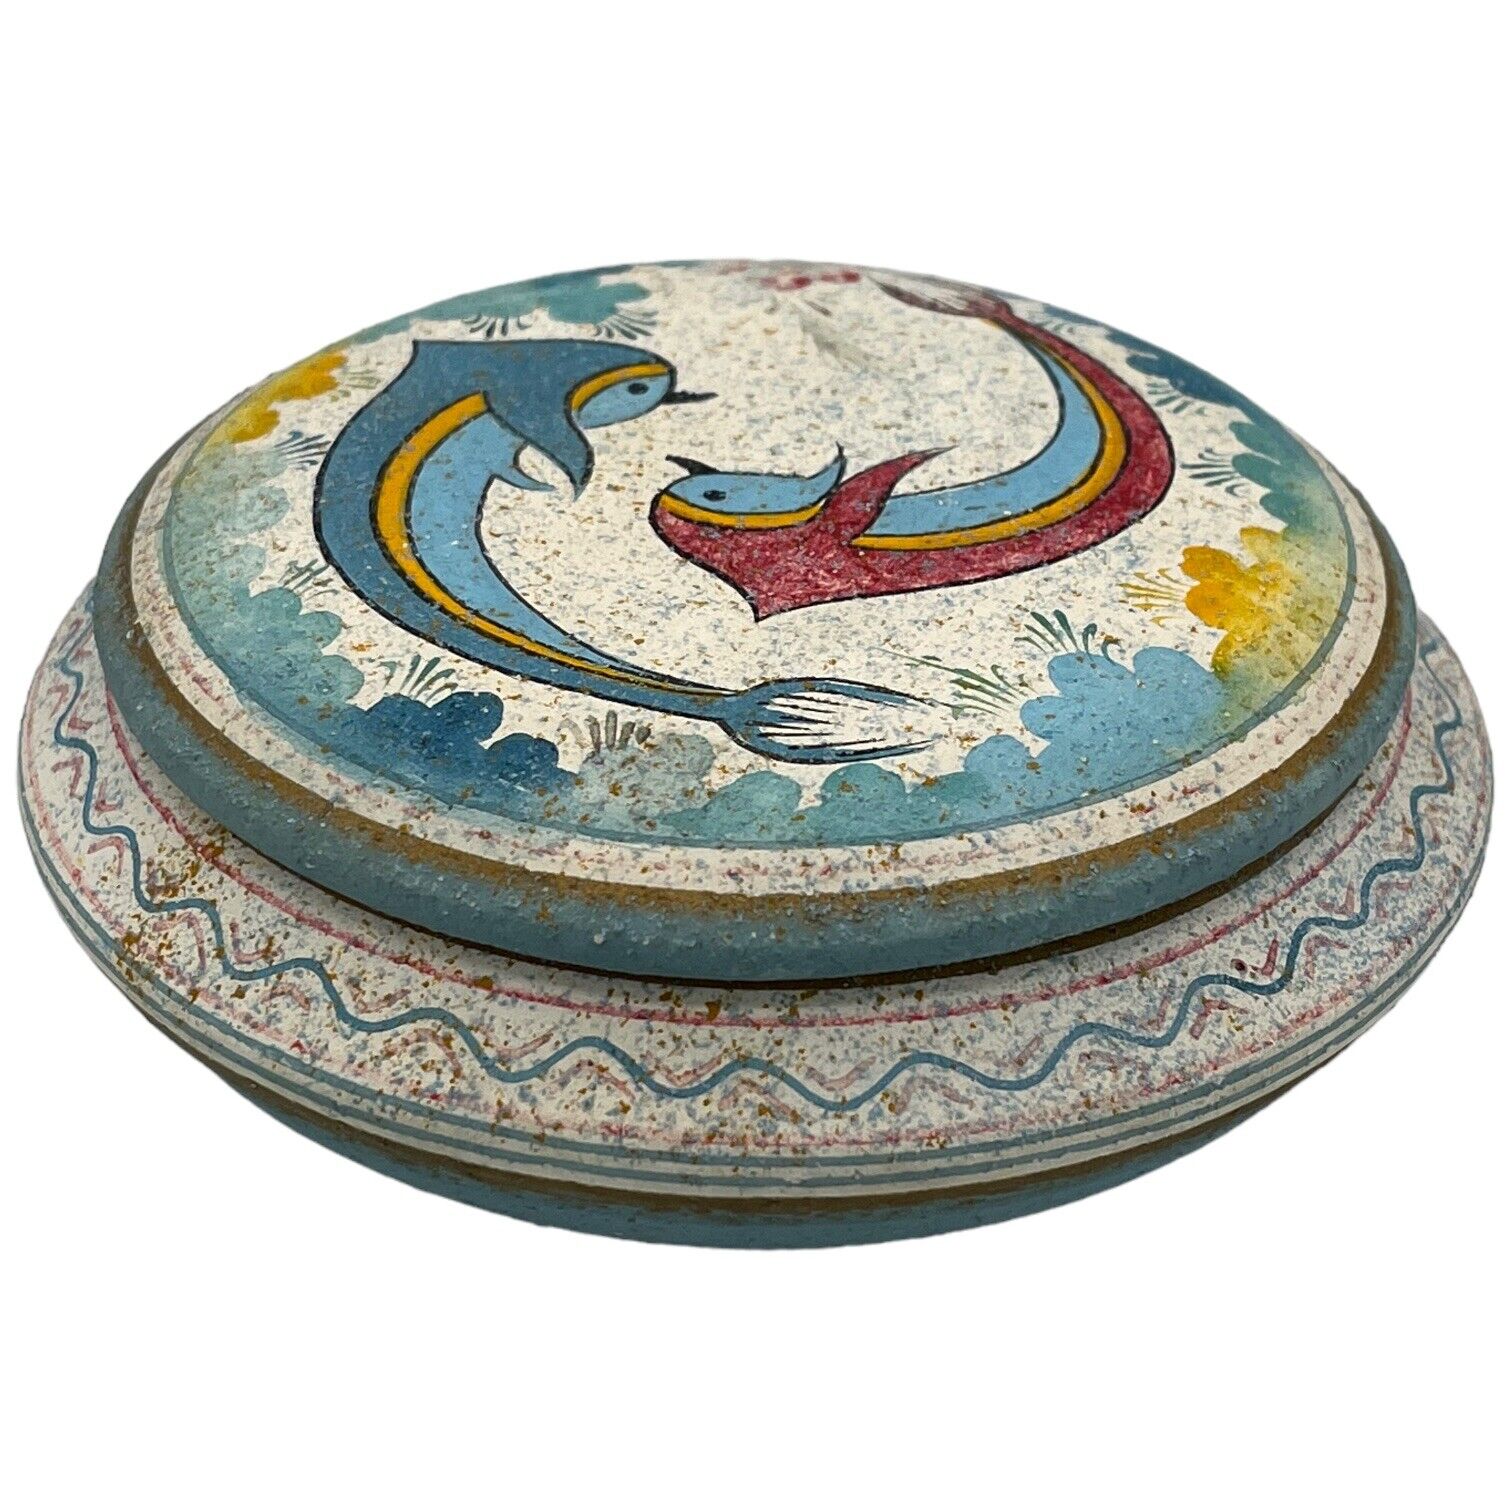 KRETA Copy 1500 BC Trinket Vanity Box with Lid Fish Dolphin Colorful Sand Finish